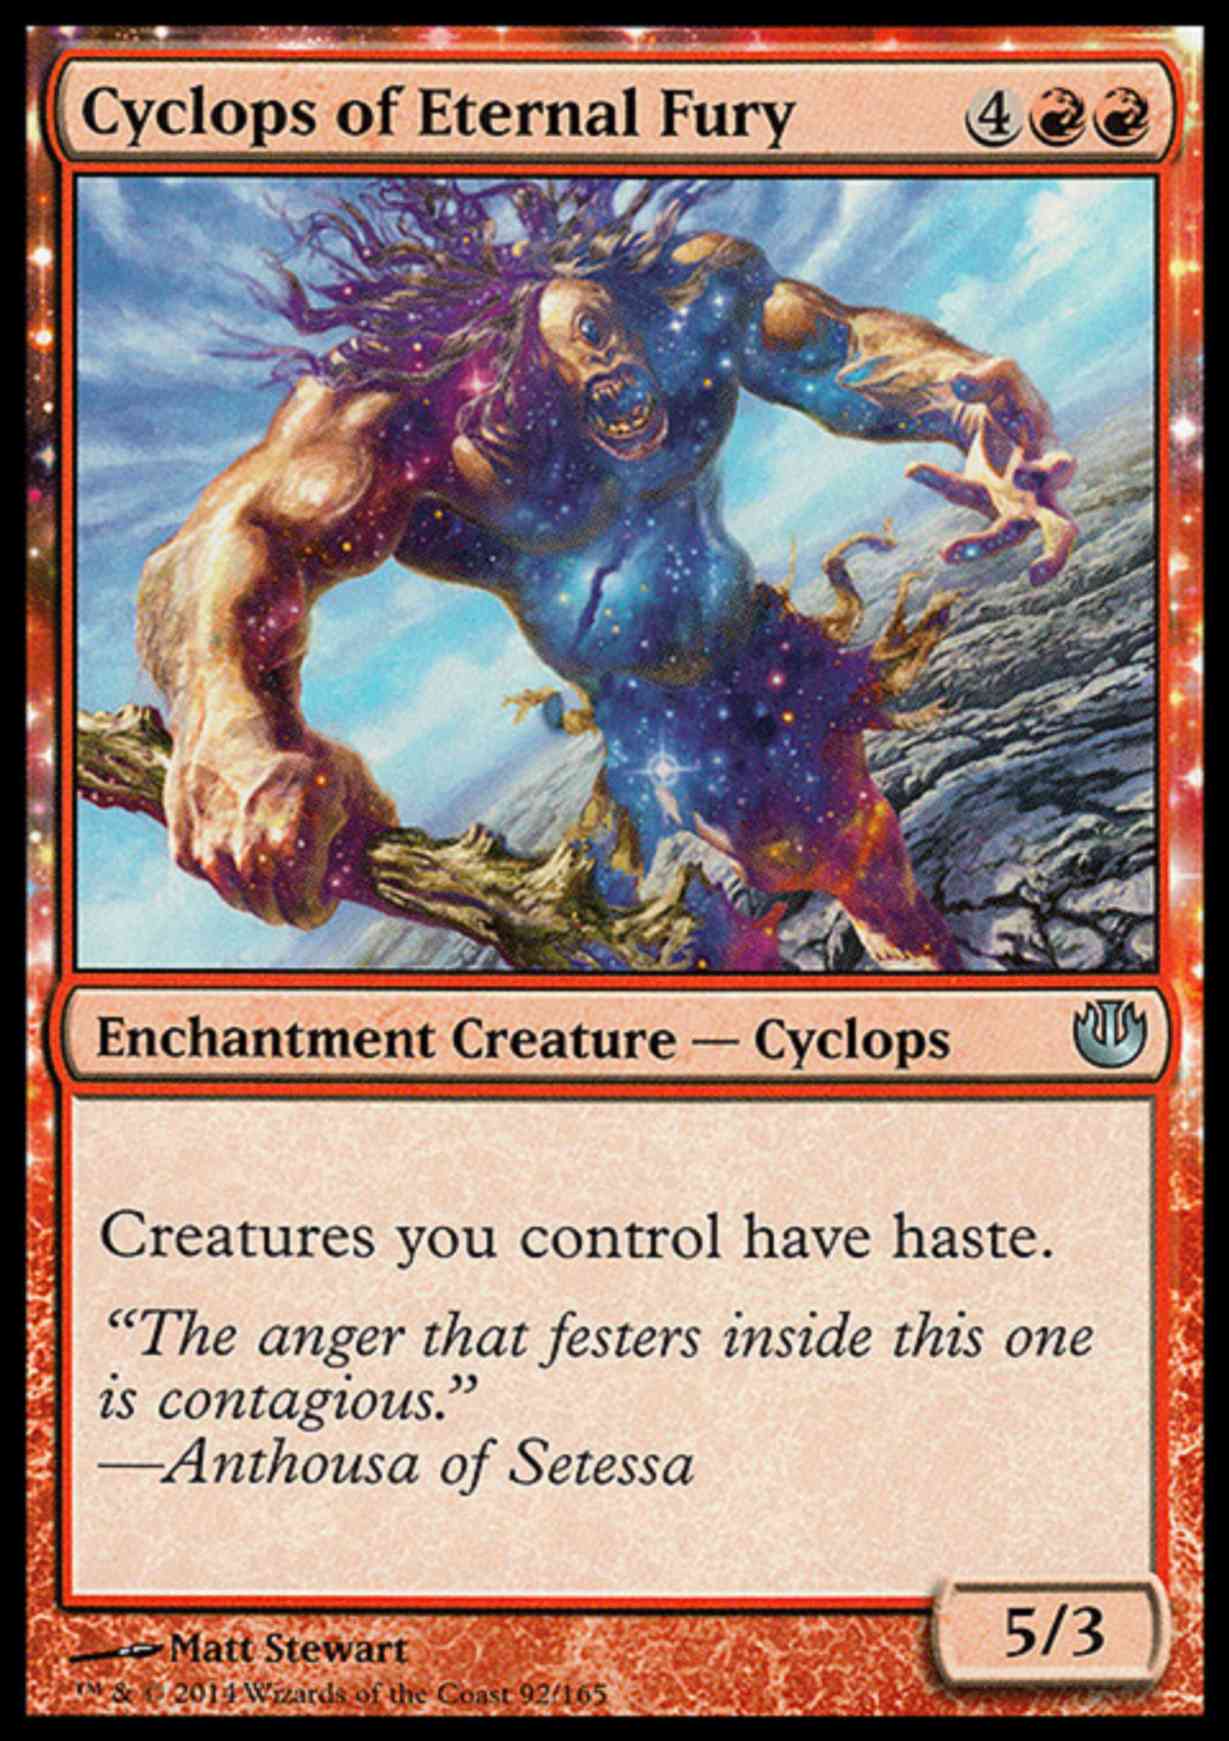 Cyclops of Eternal Fury magic card front